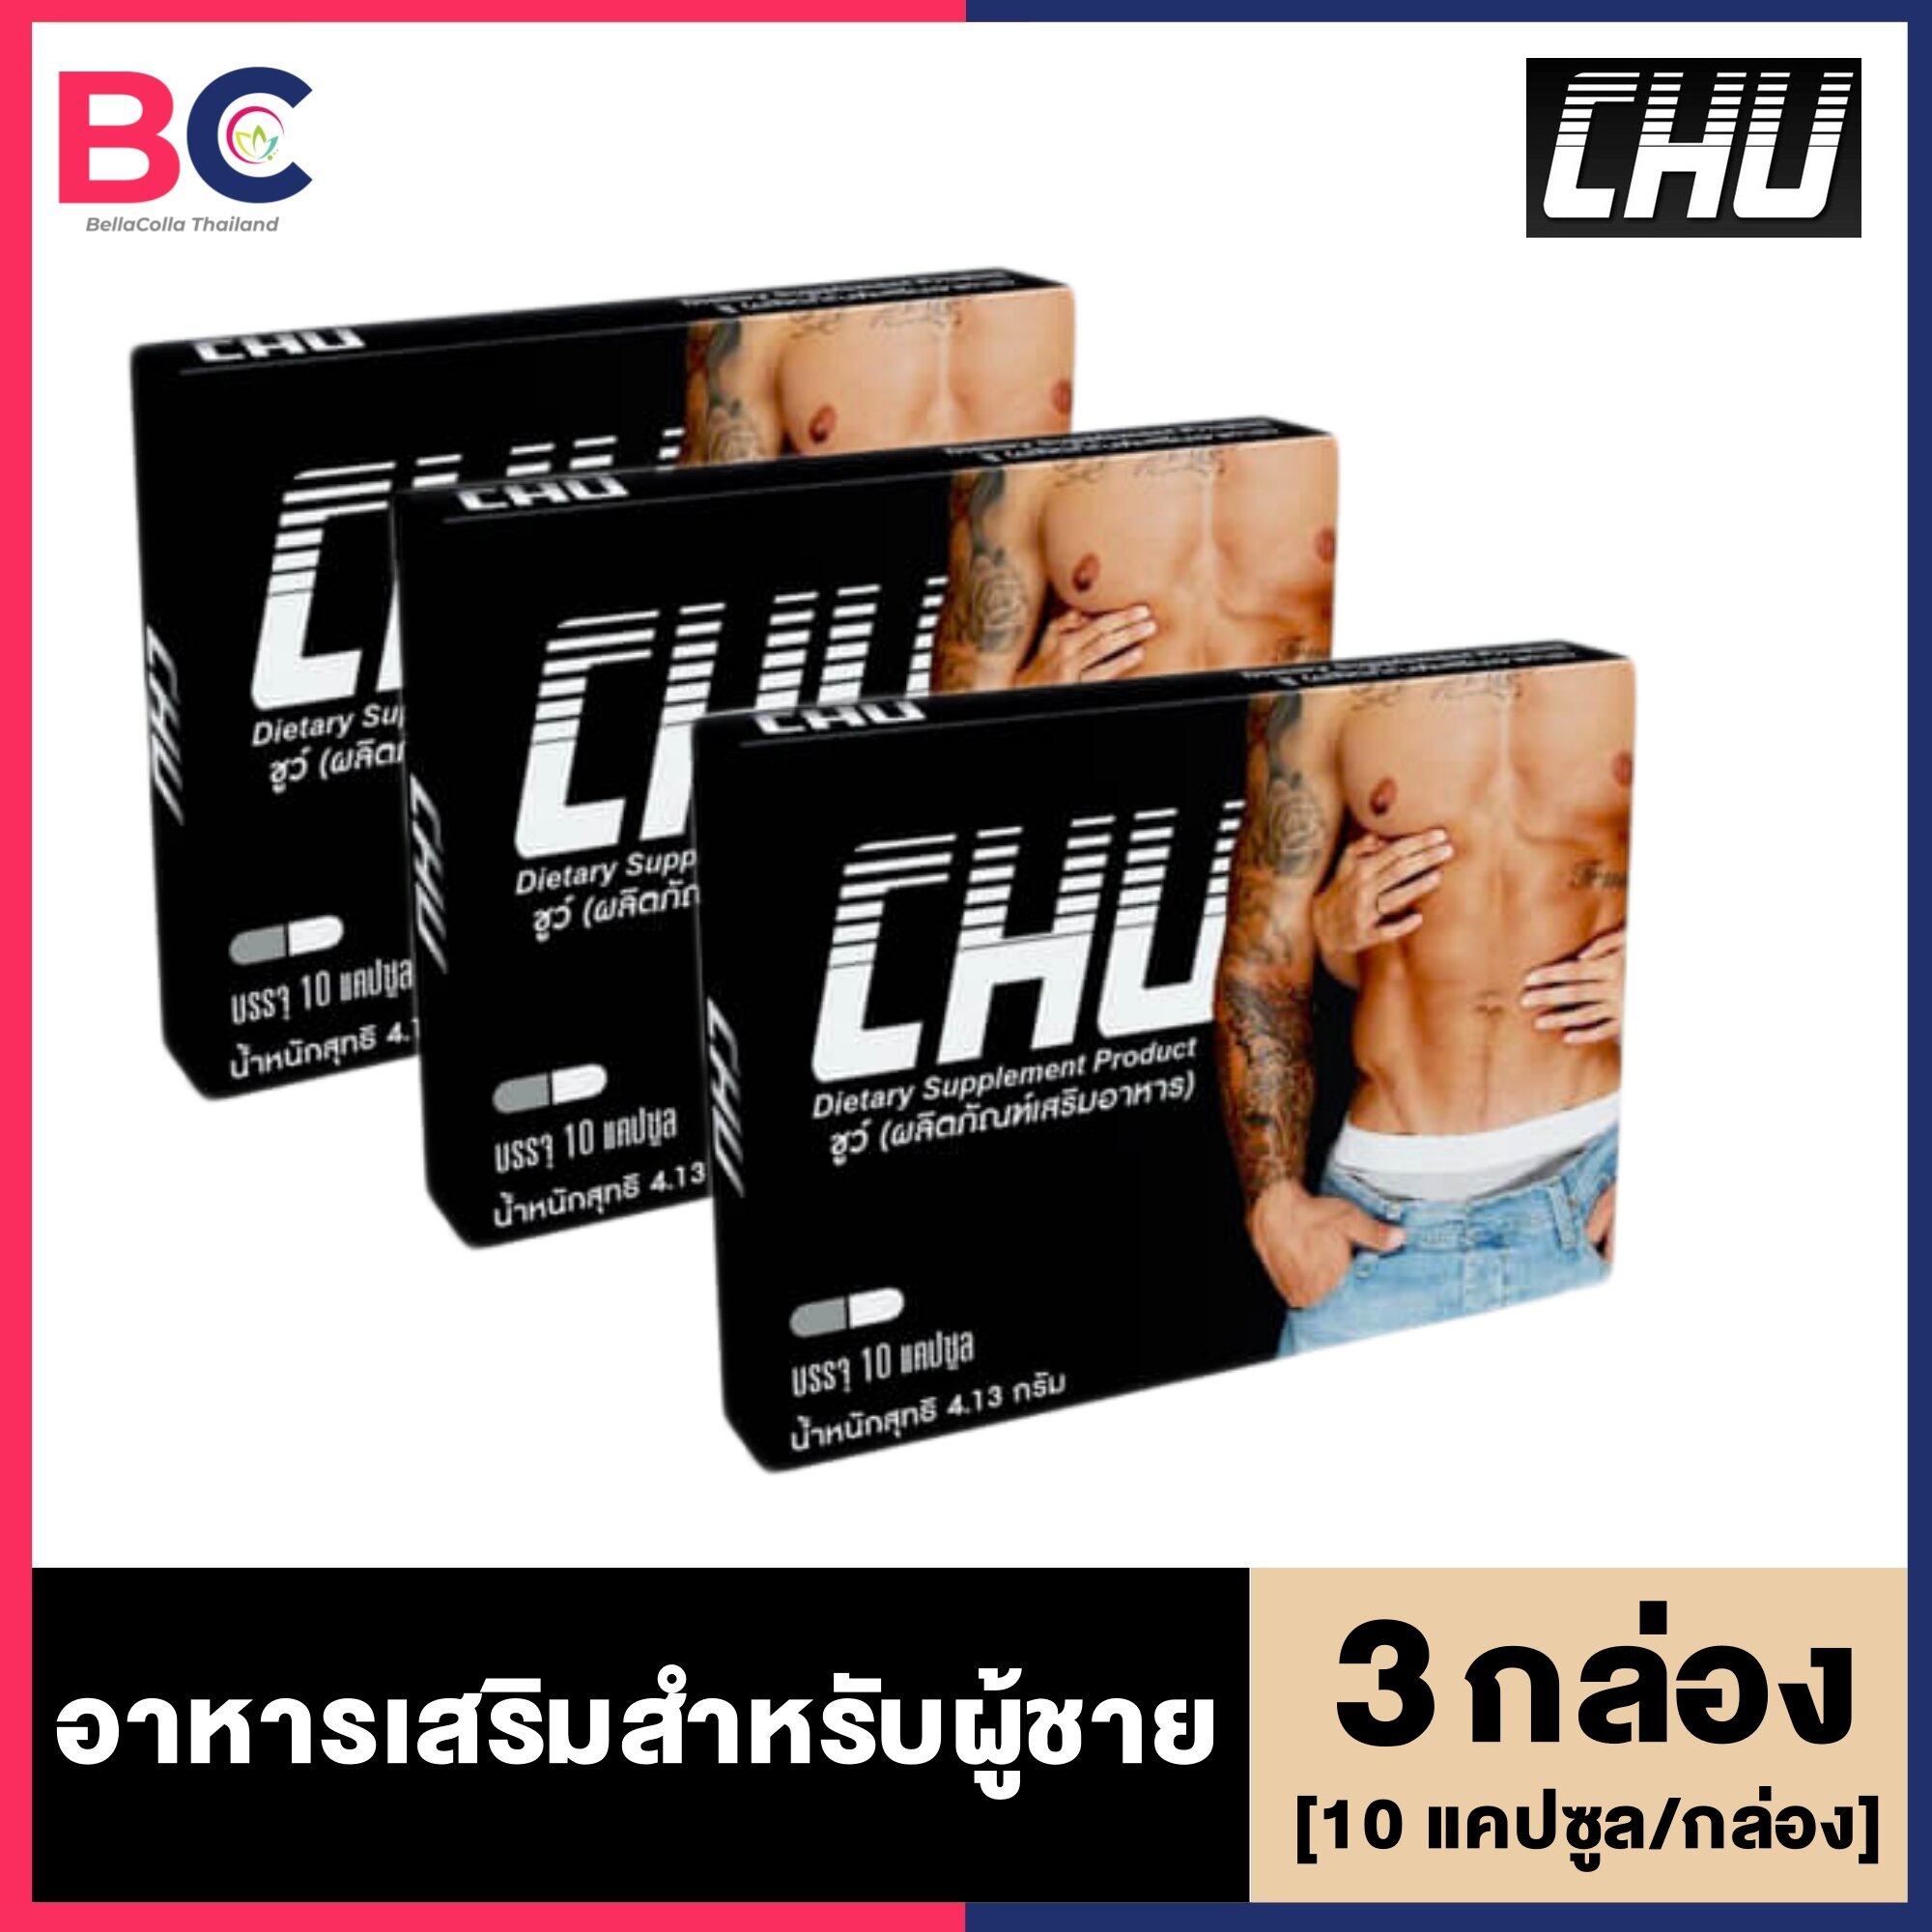 CHU ชูว์ [3 กล่อง] [10 แคปซูล/กล่อง] อาหารเสริมสำหรับท่านชาย BellaColla Thailand